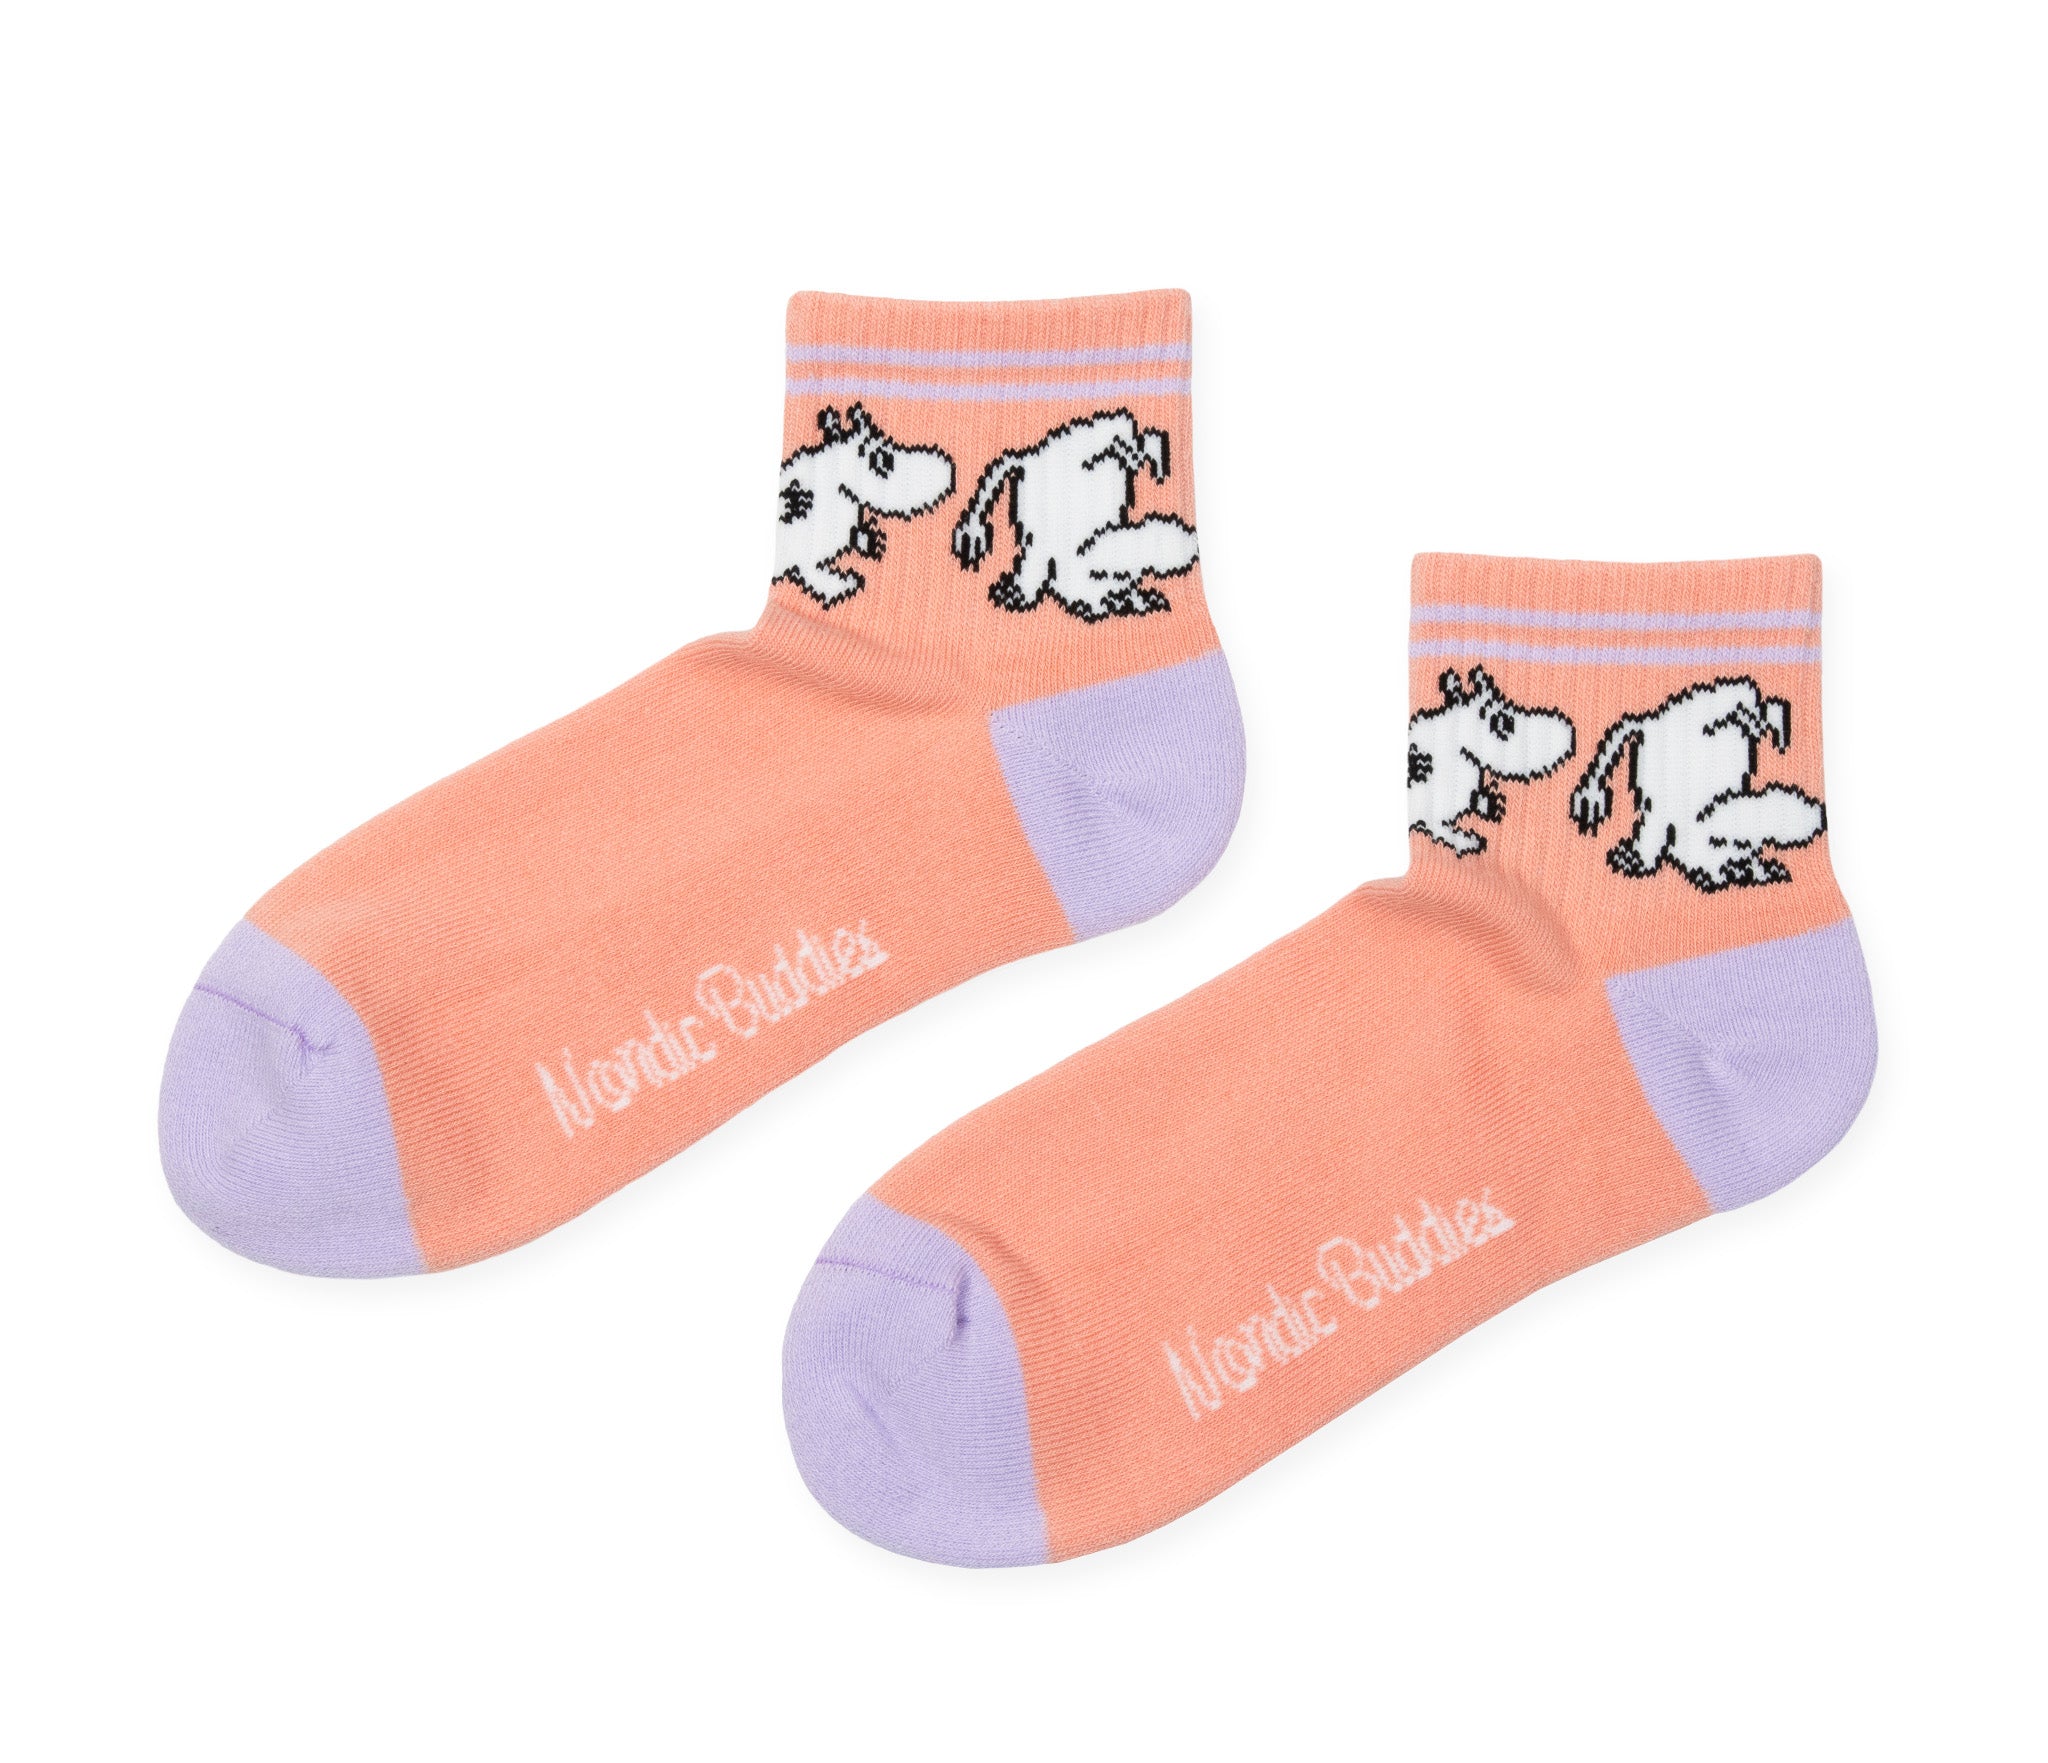 Moomintroll Retro Ladies Ankle Socks - Pastel Peach and Lilac